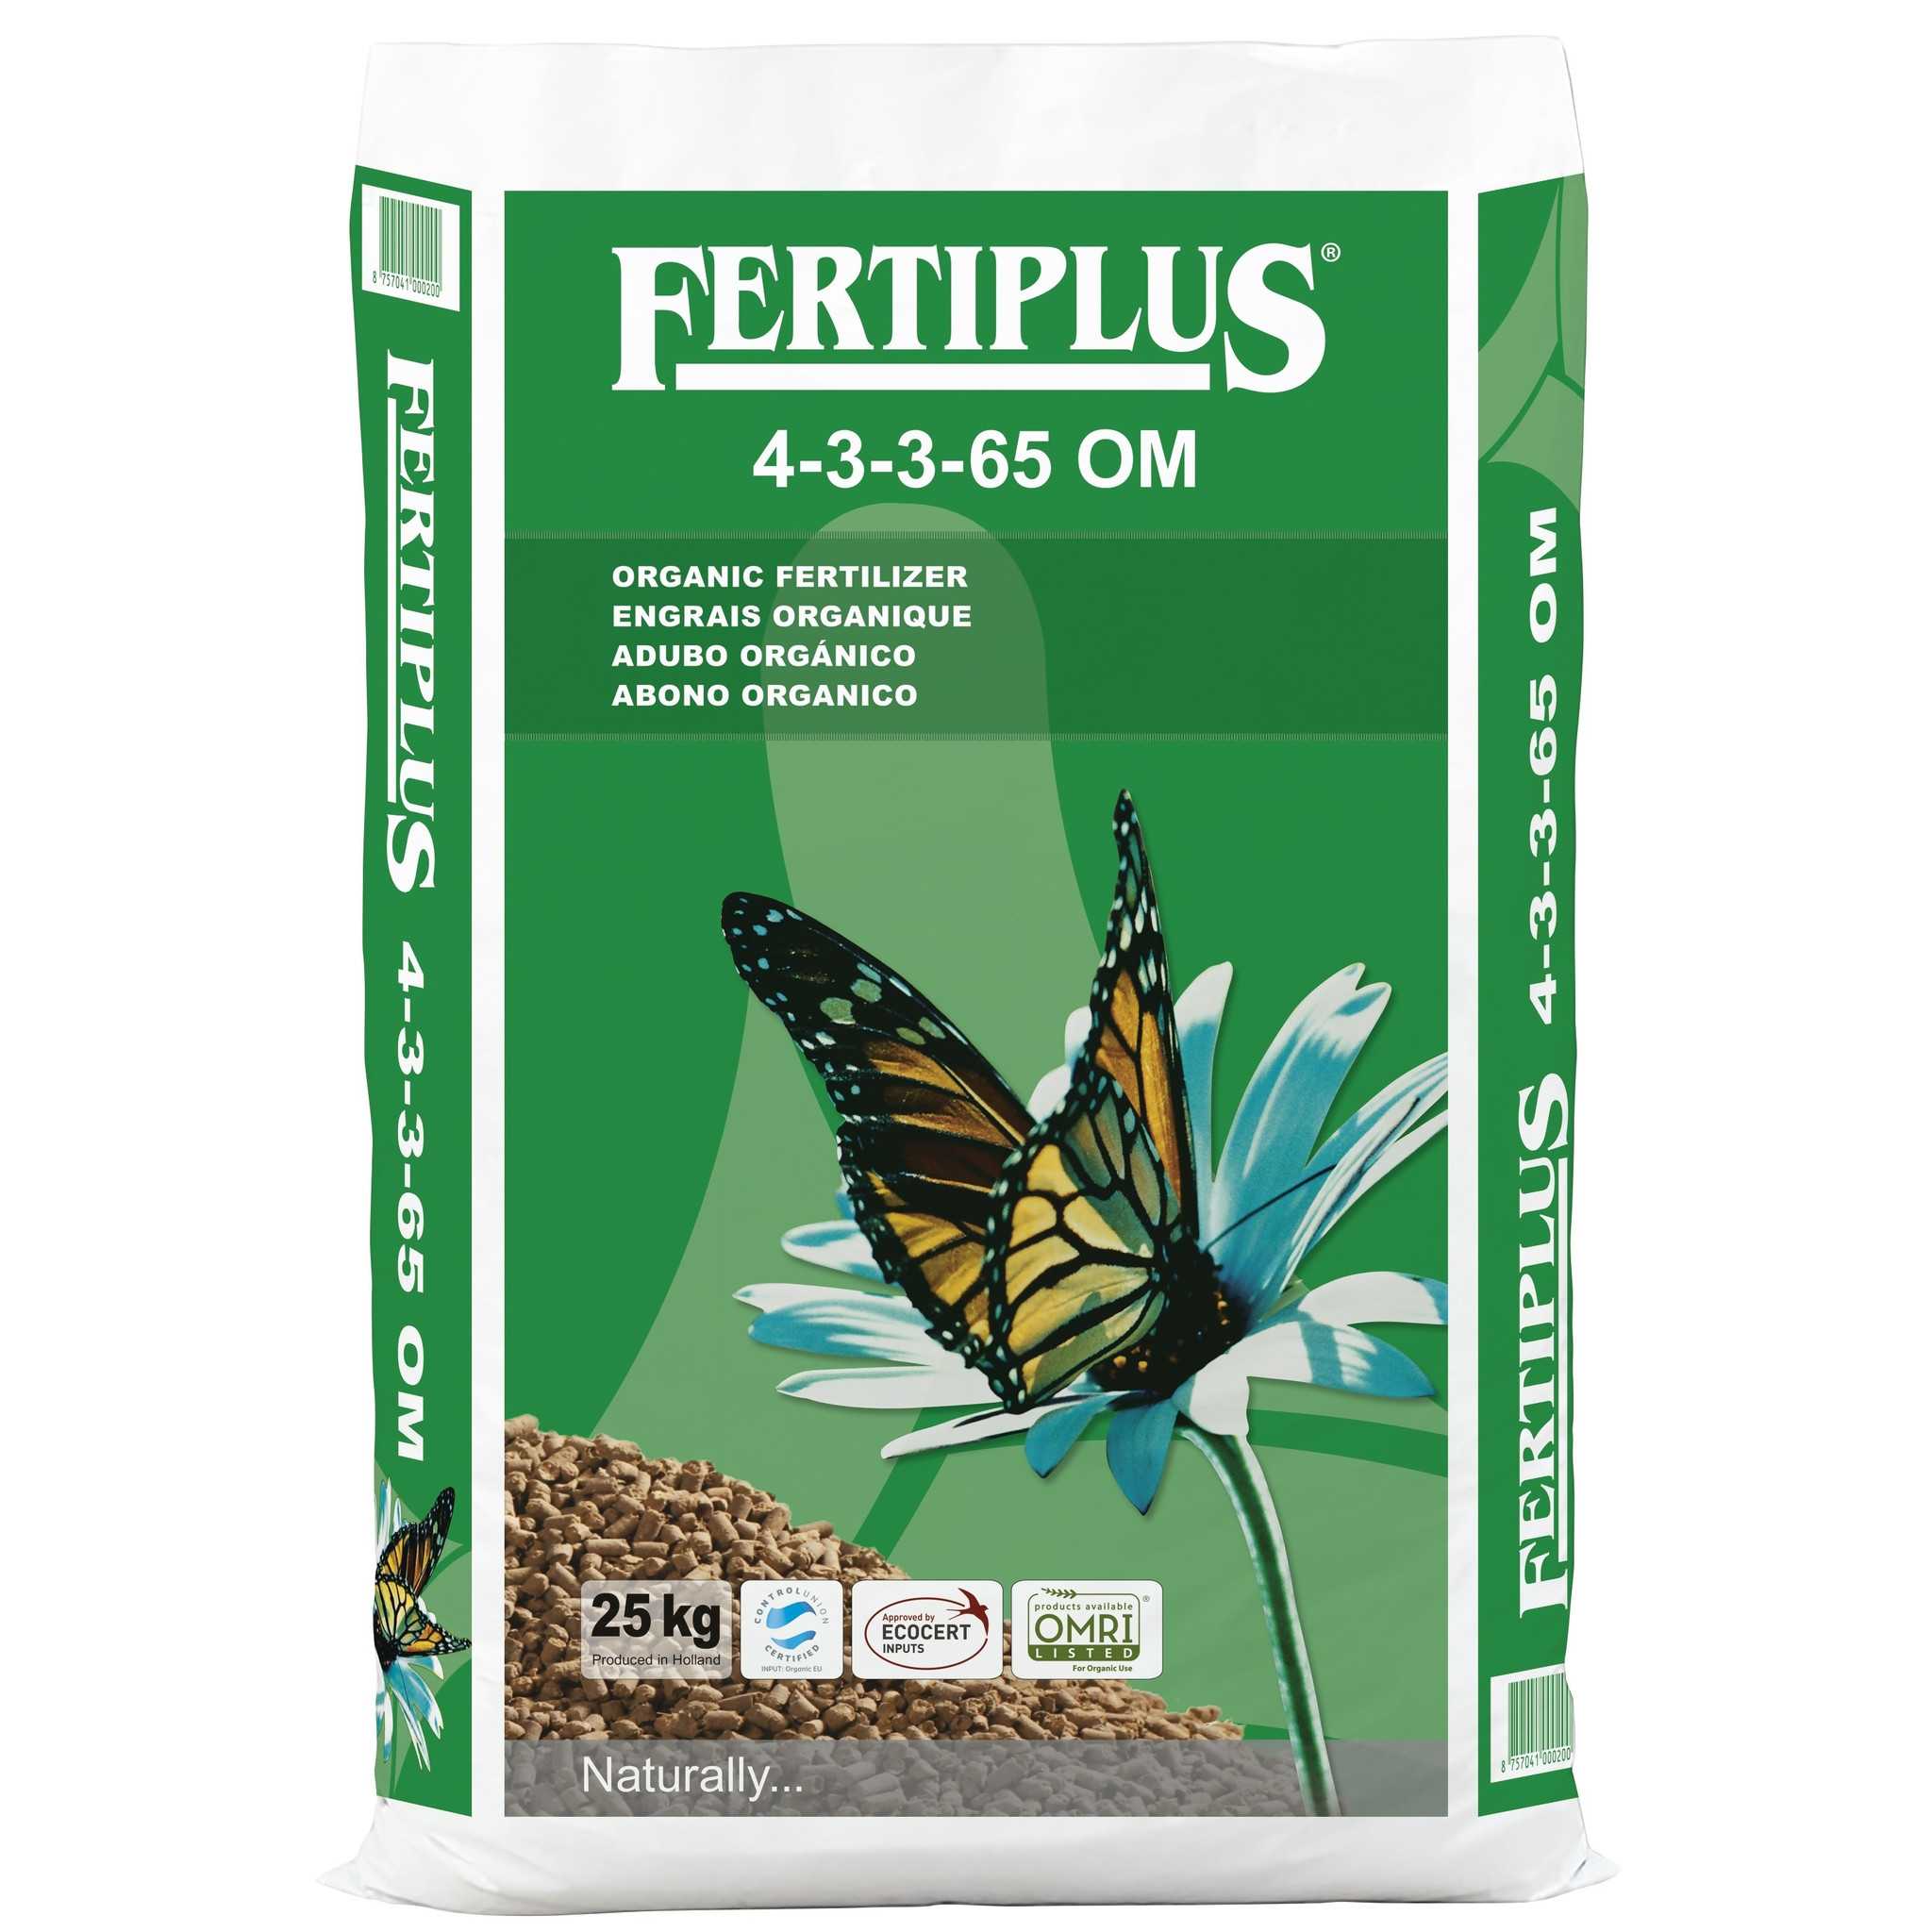 Fertiplus Organic Fertilizer